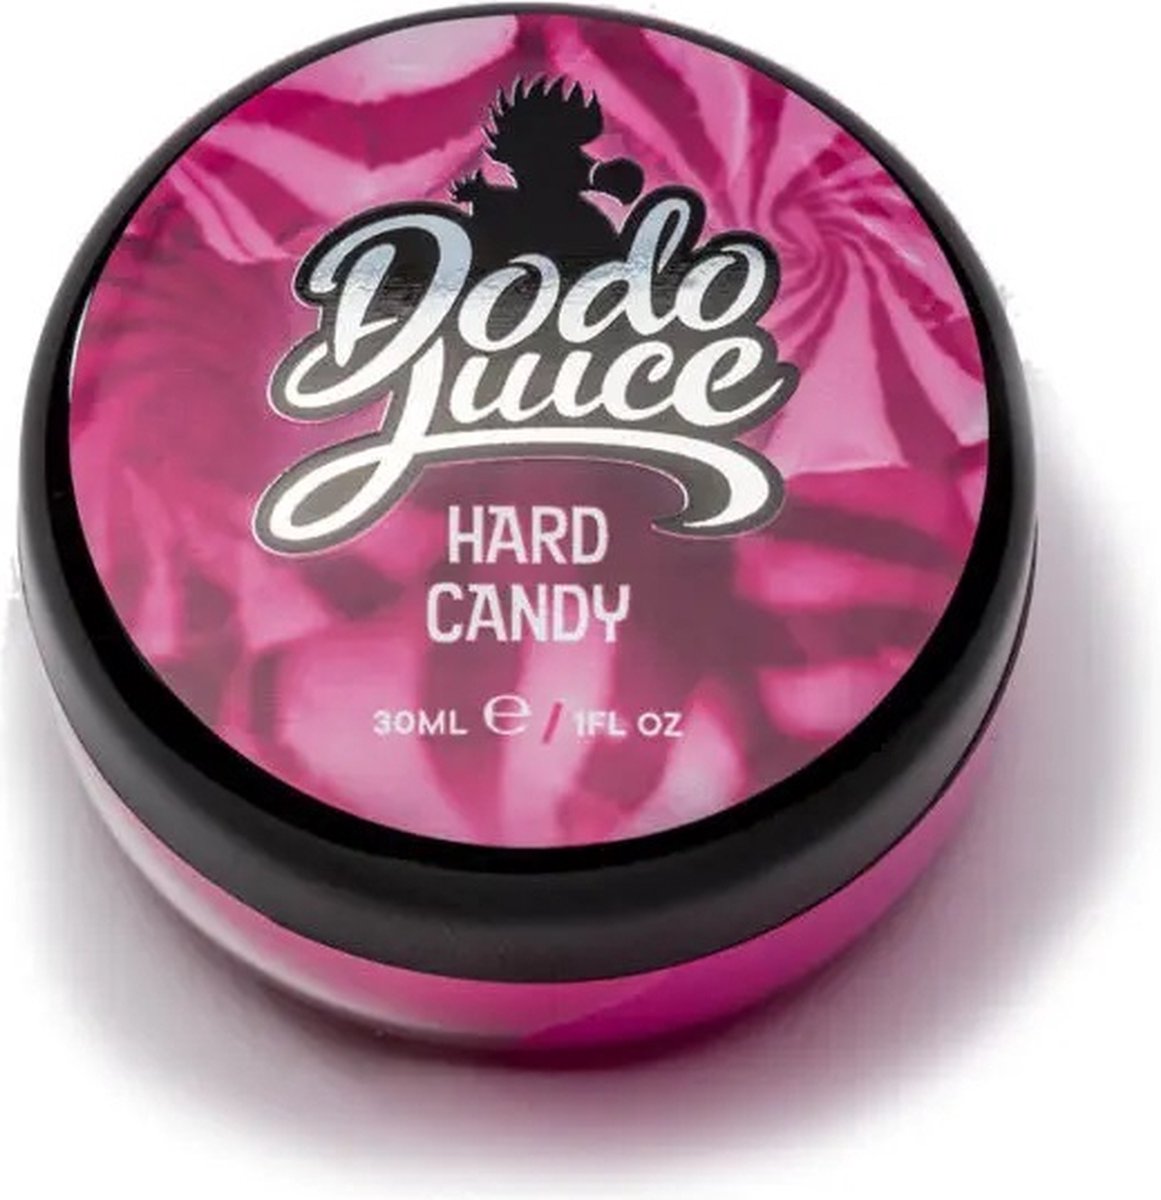 Dodo Juice - Hard Candy - 30ml - Wax